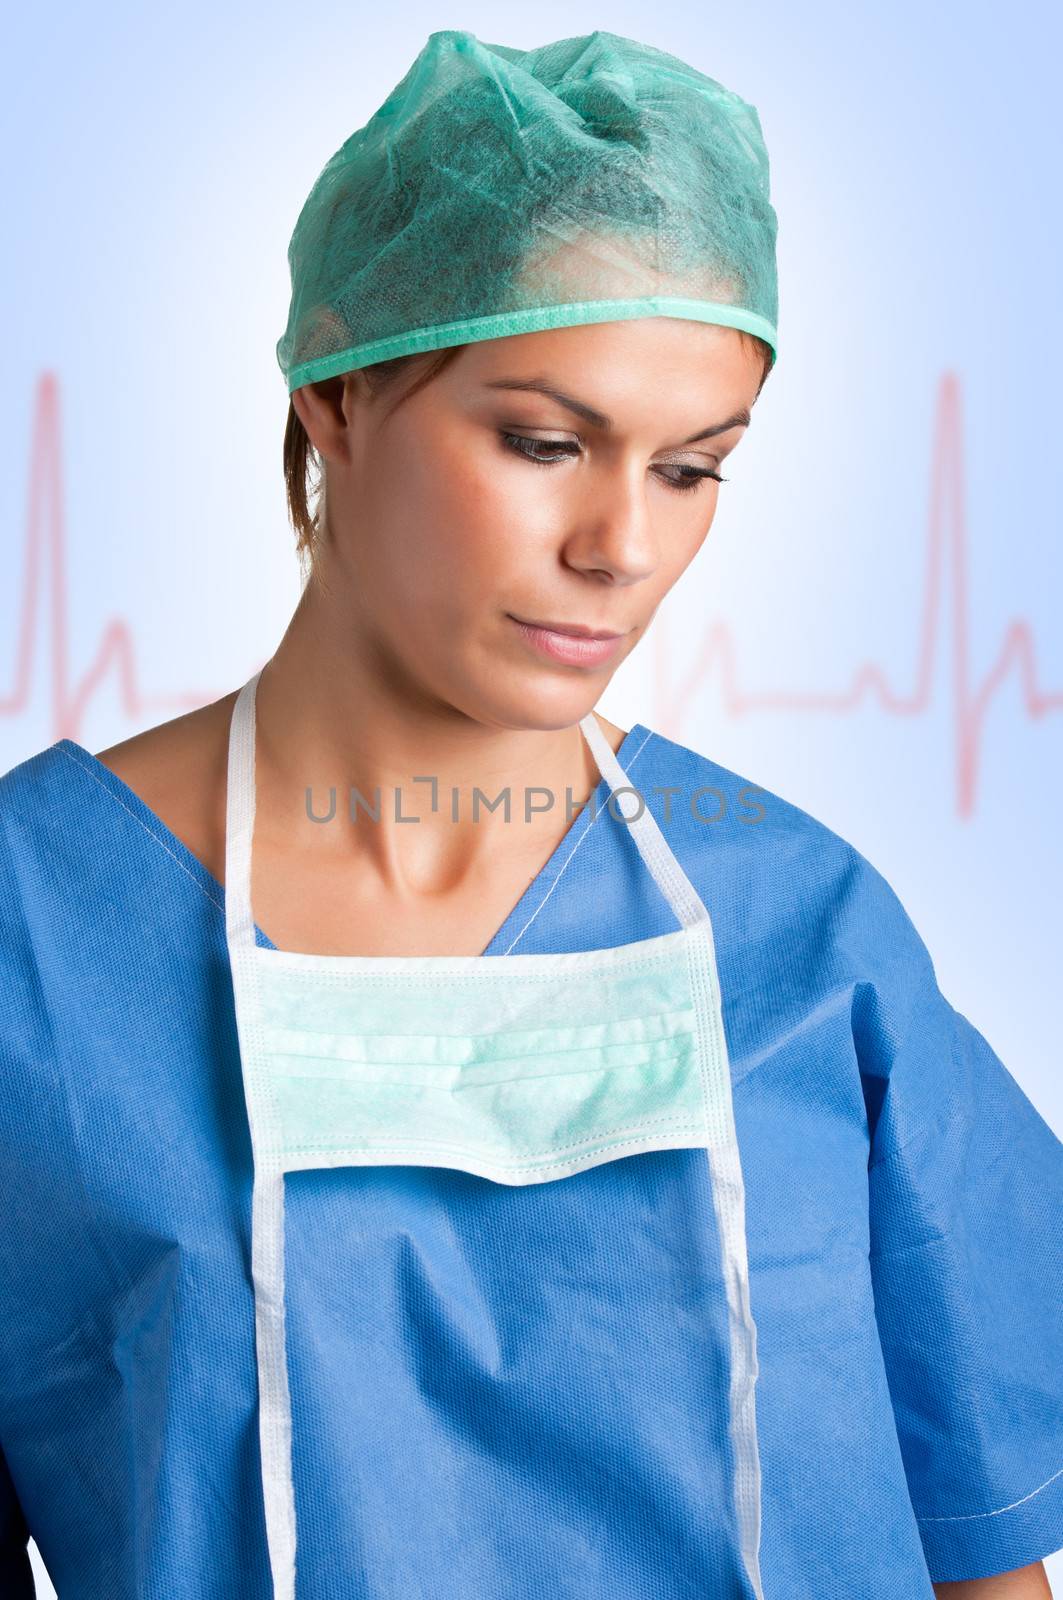 Sad Female Surgeon by ruigsantos